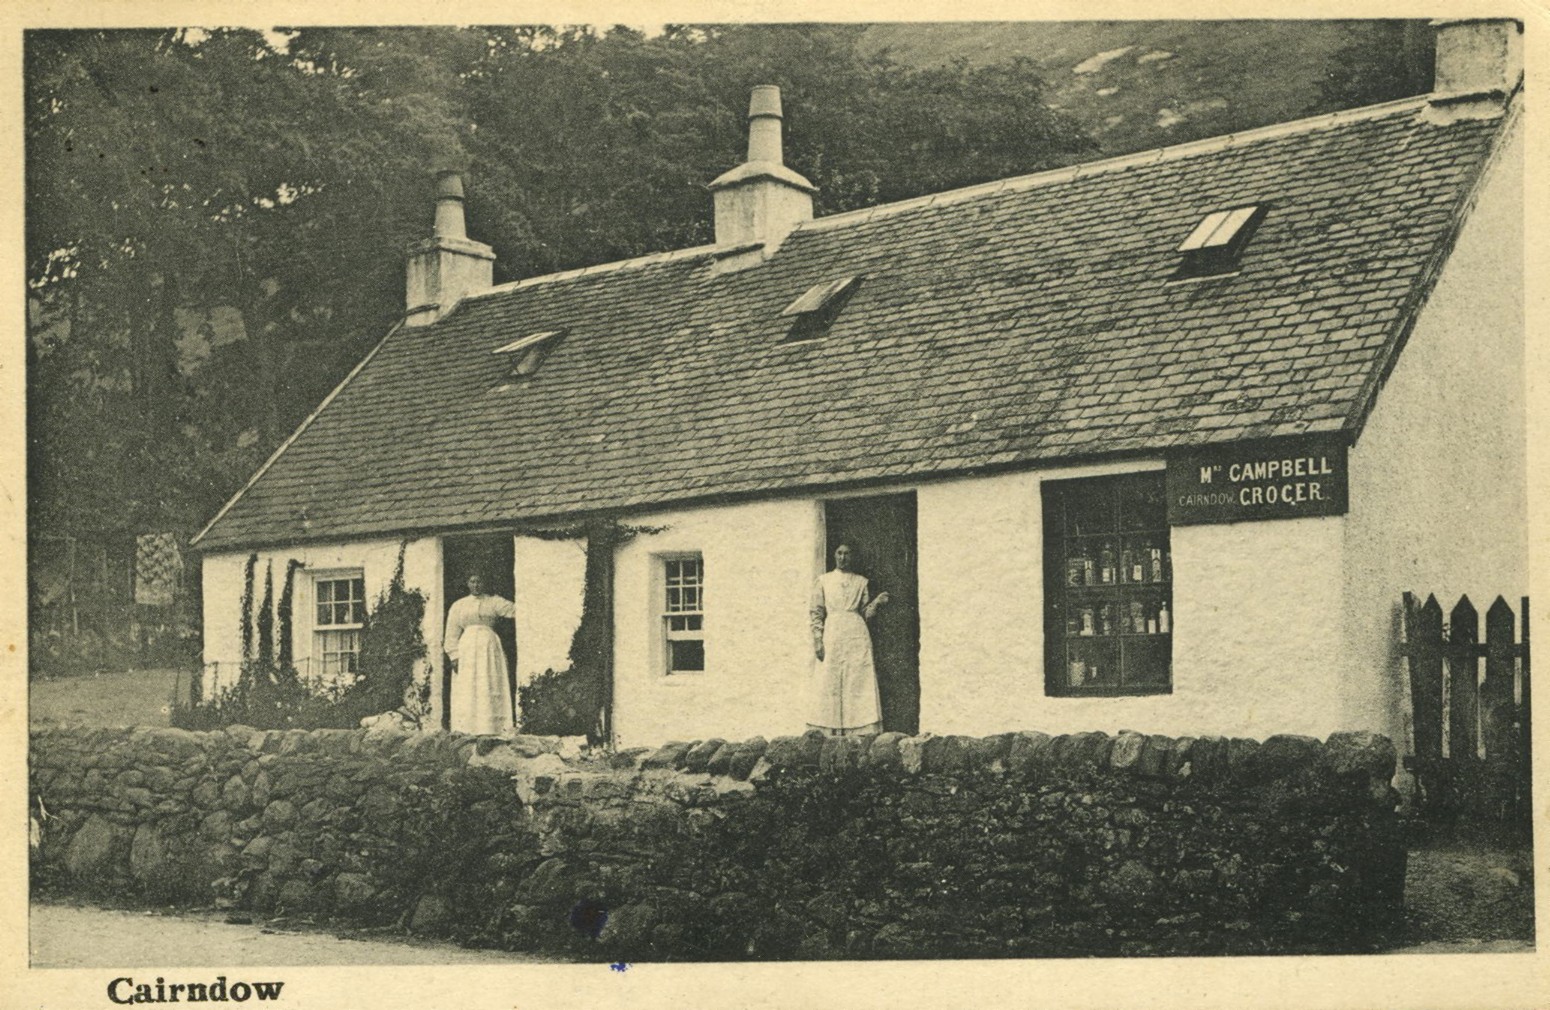  Cairndow Cottage